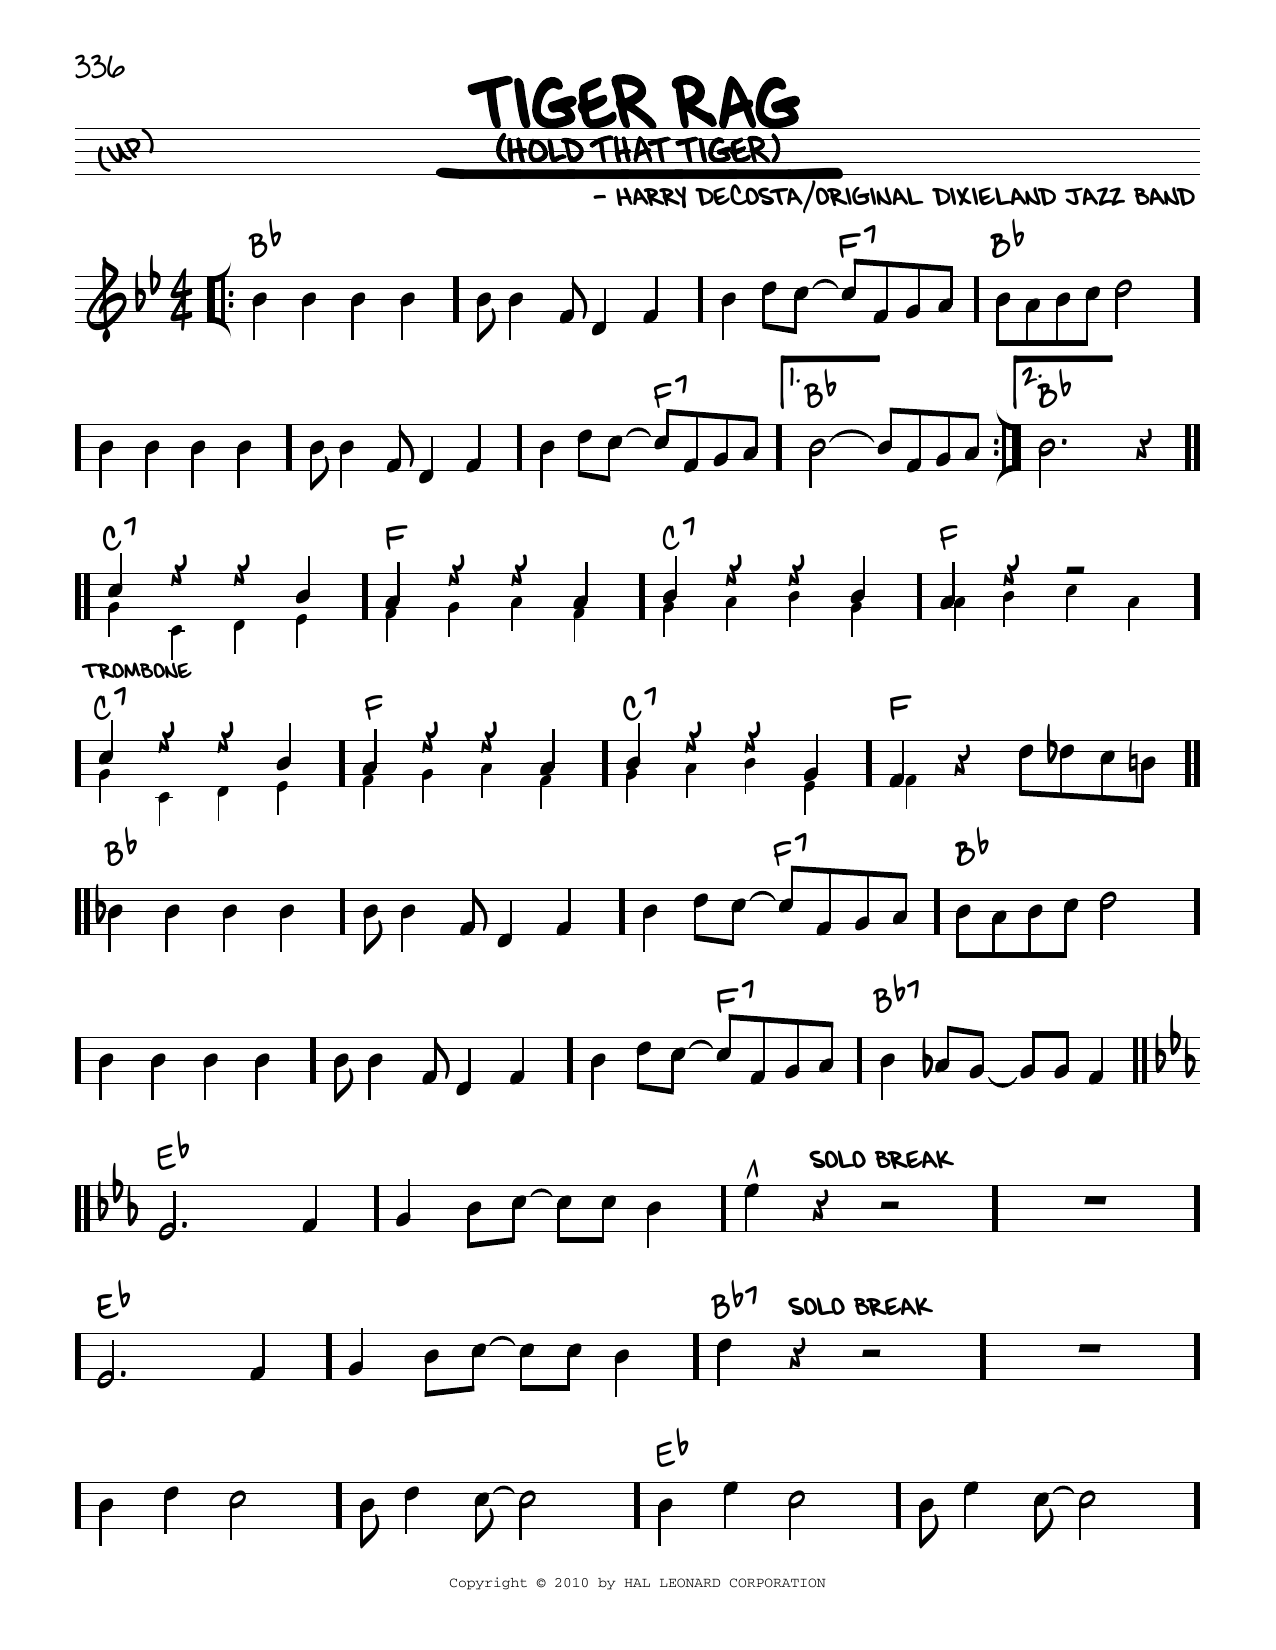 Original Dixieland Jazz Band Tiger Rag (Hold That Tiger) (arr. Robert Rawlins) sheet music notes and chords arranged for Real Book – Melody, Lyrics & Chords